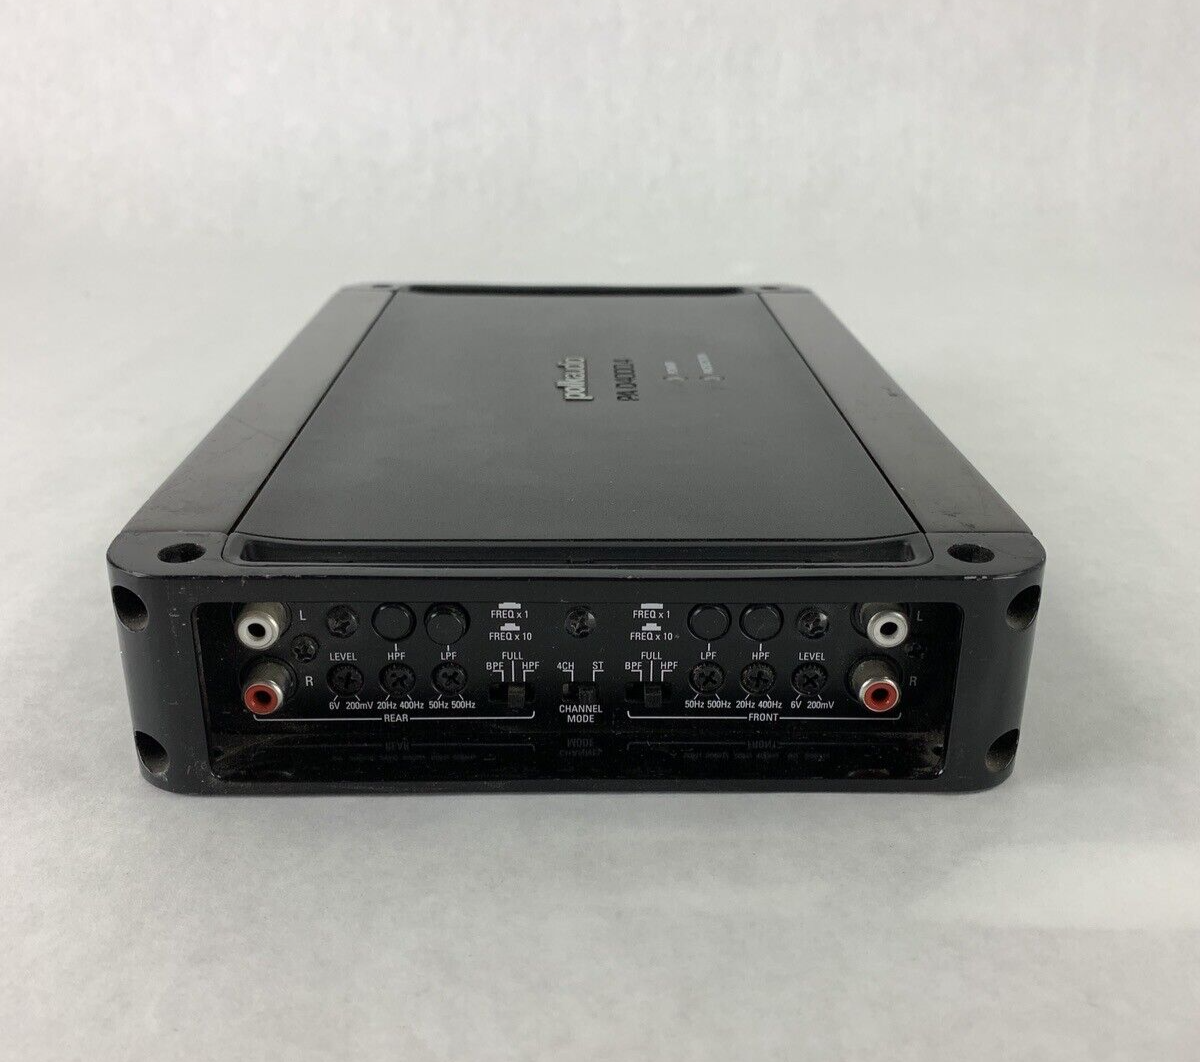 Polk Audio PAD4000.4 4-Channel 800 Watt Car Audio Amplifier For Parts and Repair